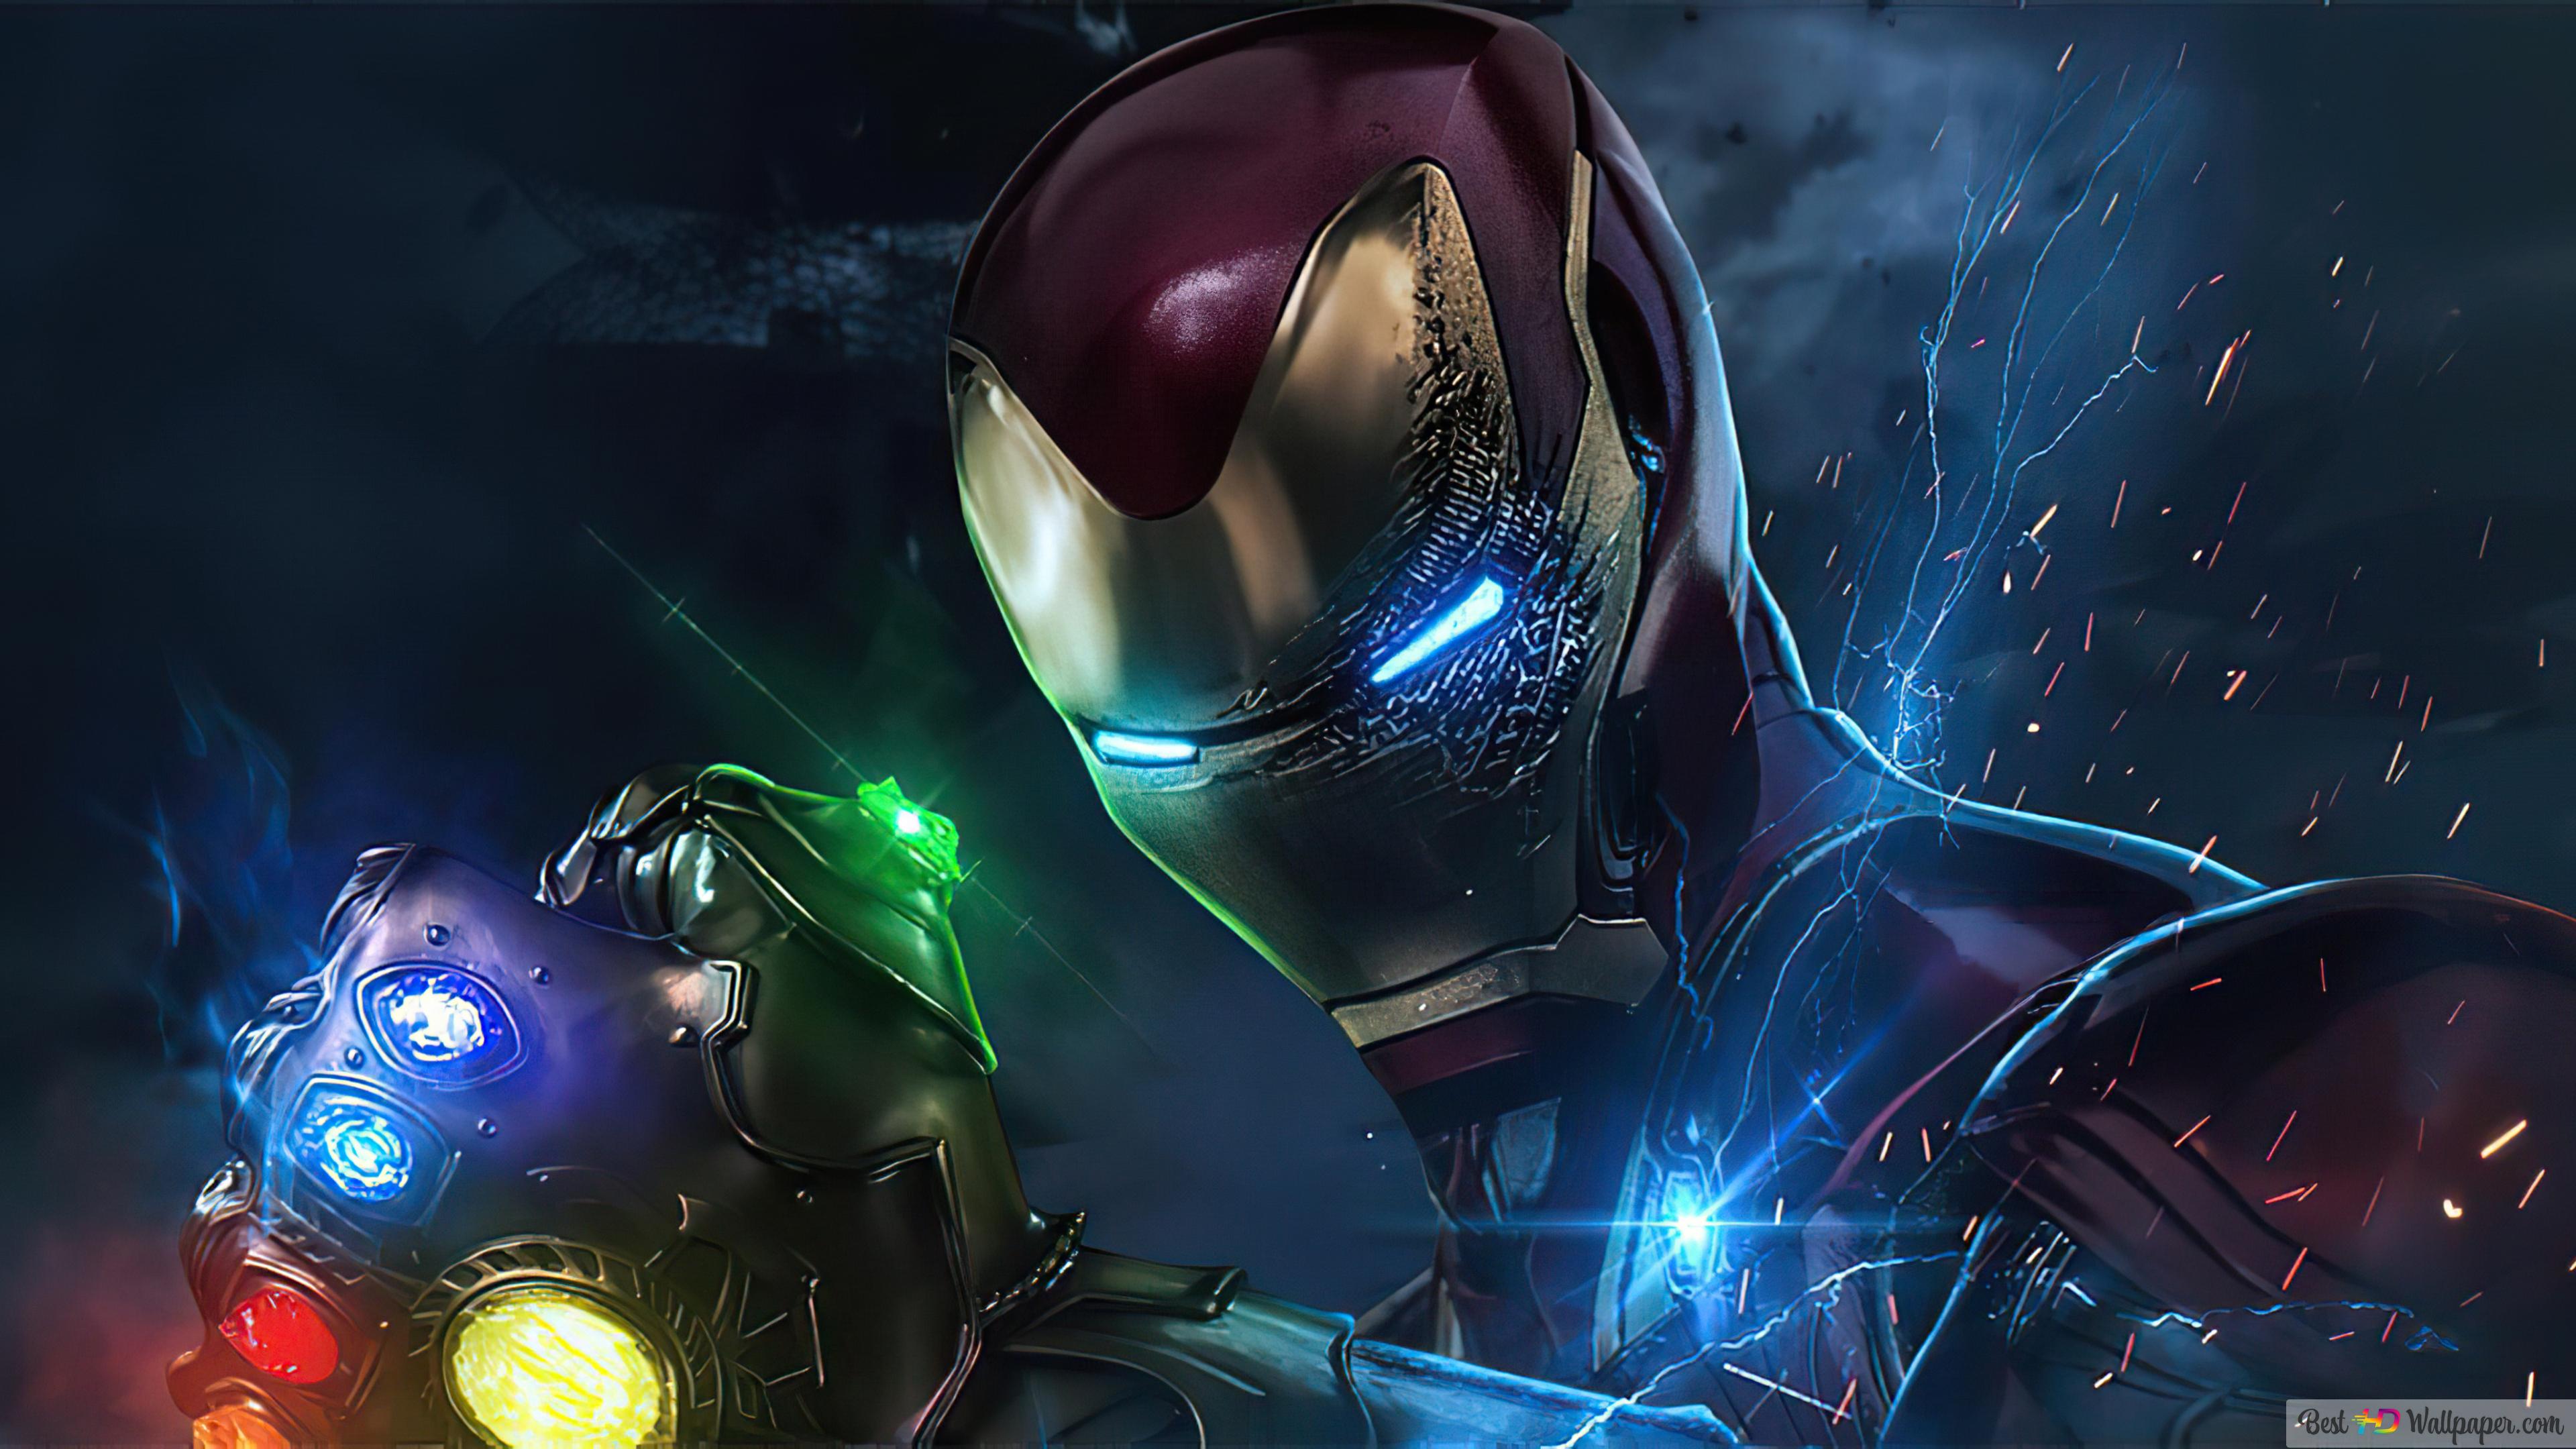 Iron Man Holding Infinity Stones 4K wallpaper download